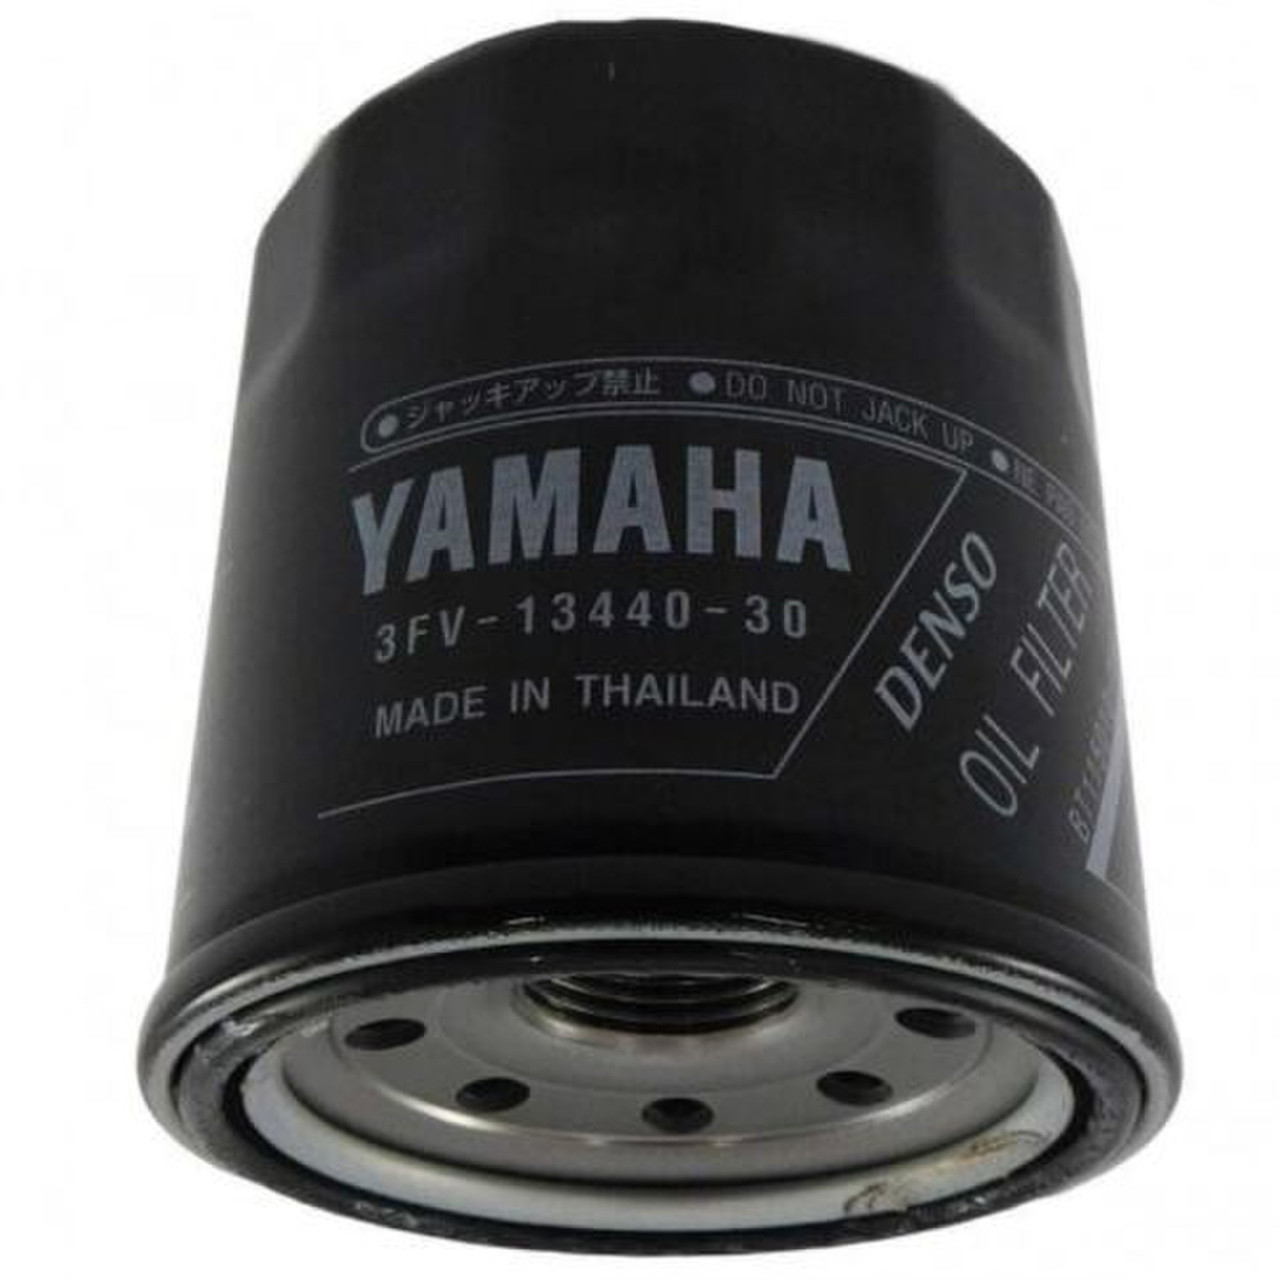 Yamaha New OEM Oil FIlter Cleaner Element Assembly, 3FV-13440-30-00